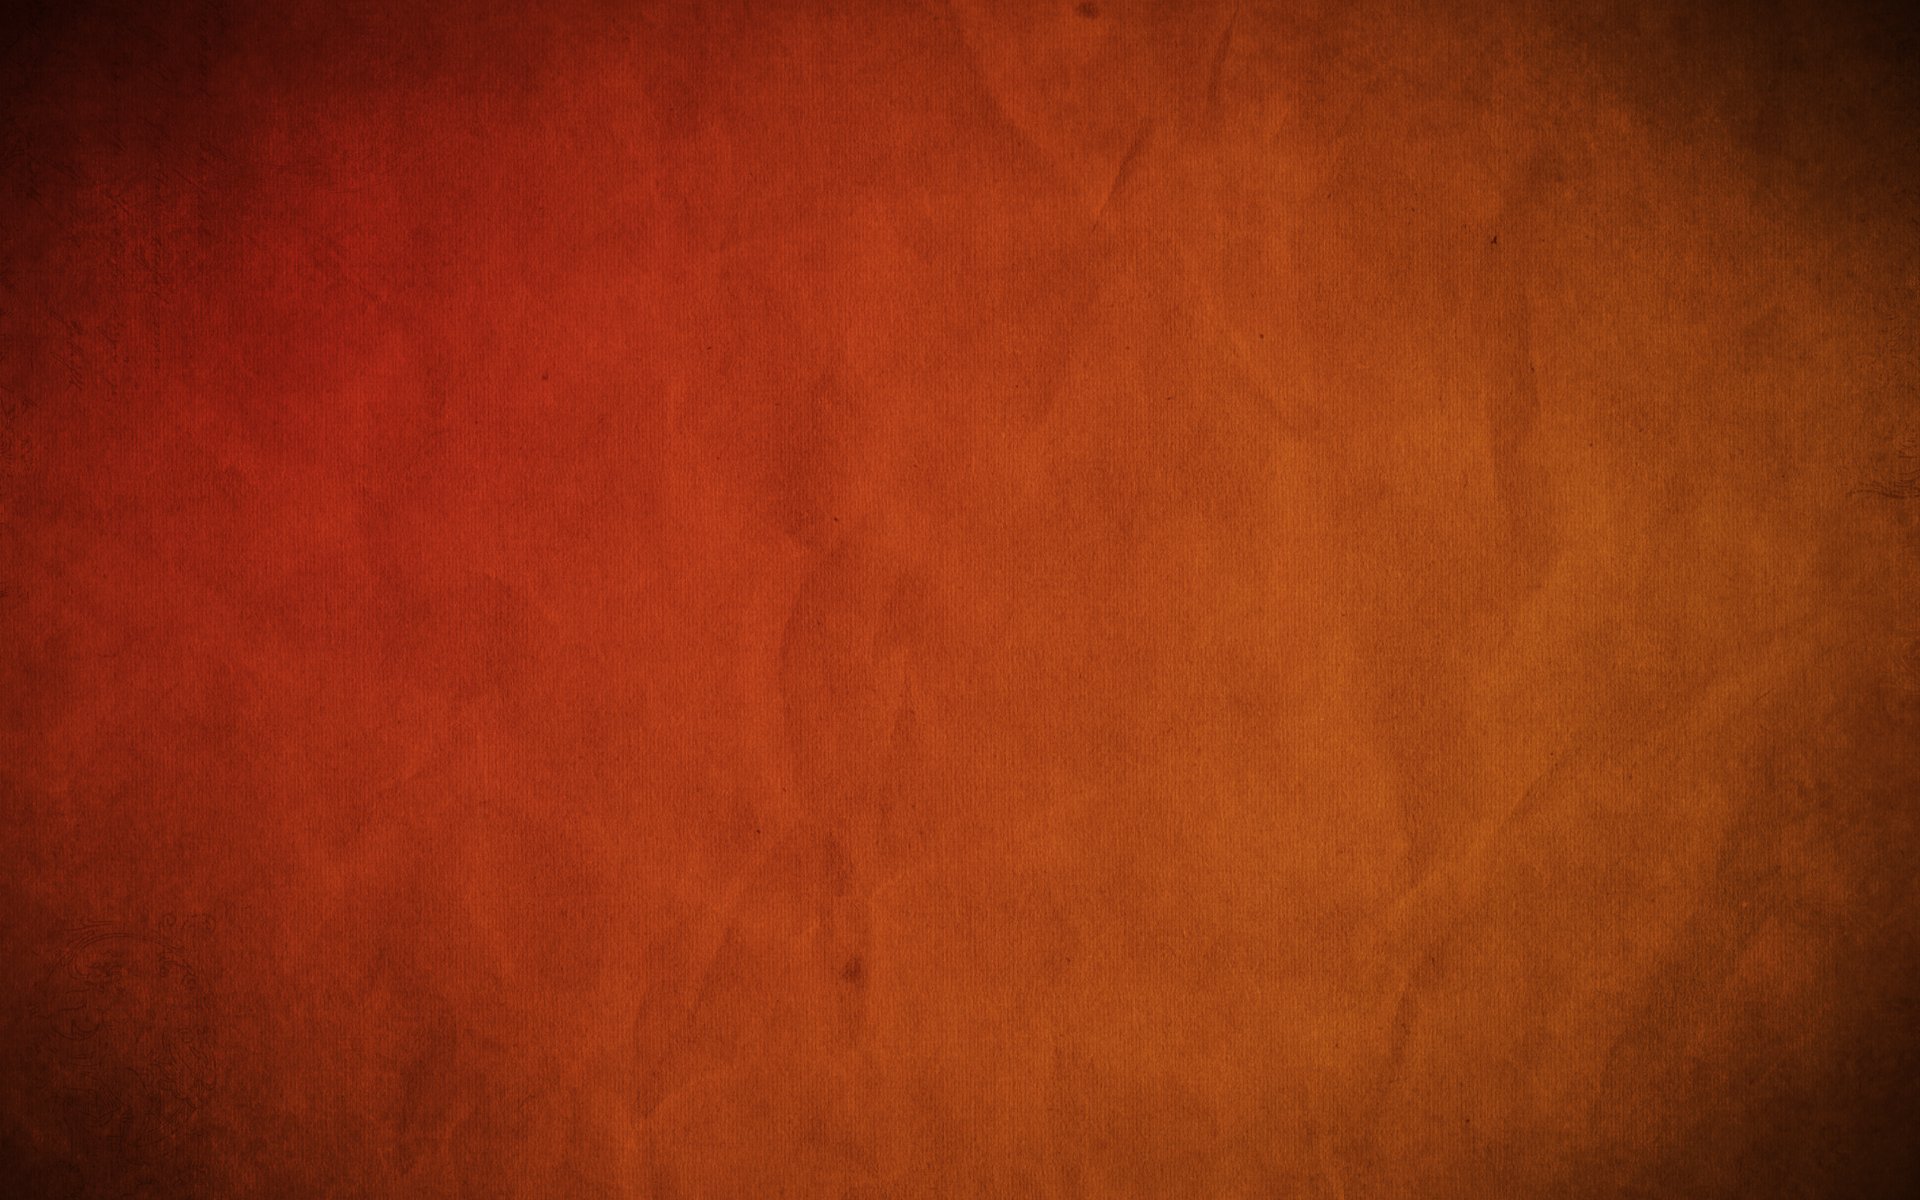 General 1920x1200 texture template red orange minimalism orange background simple background digital art